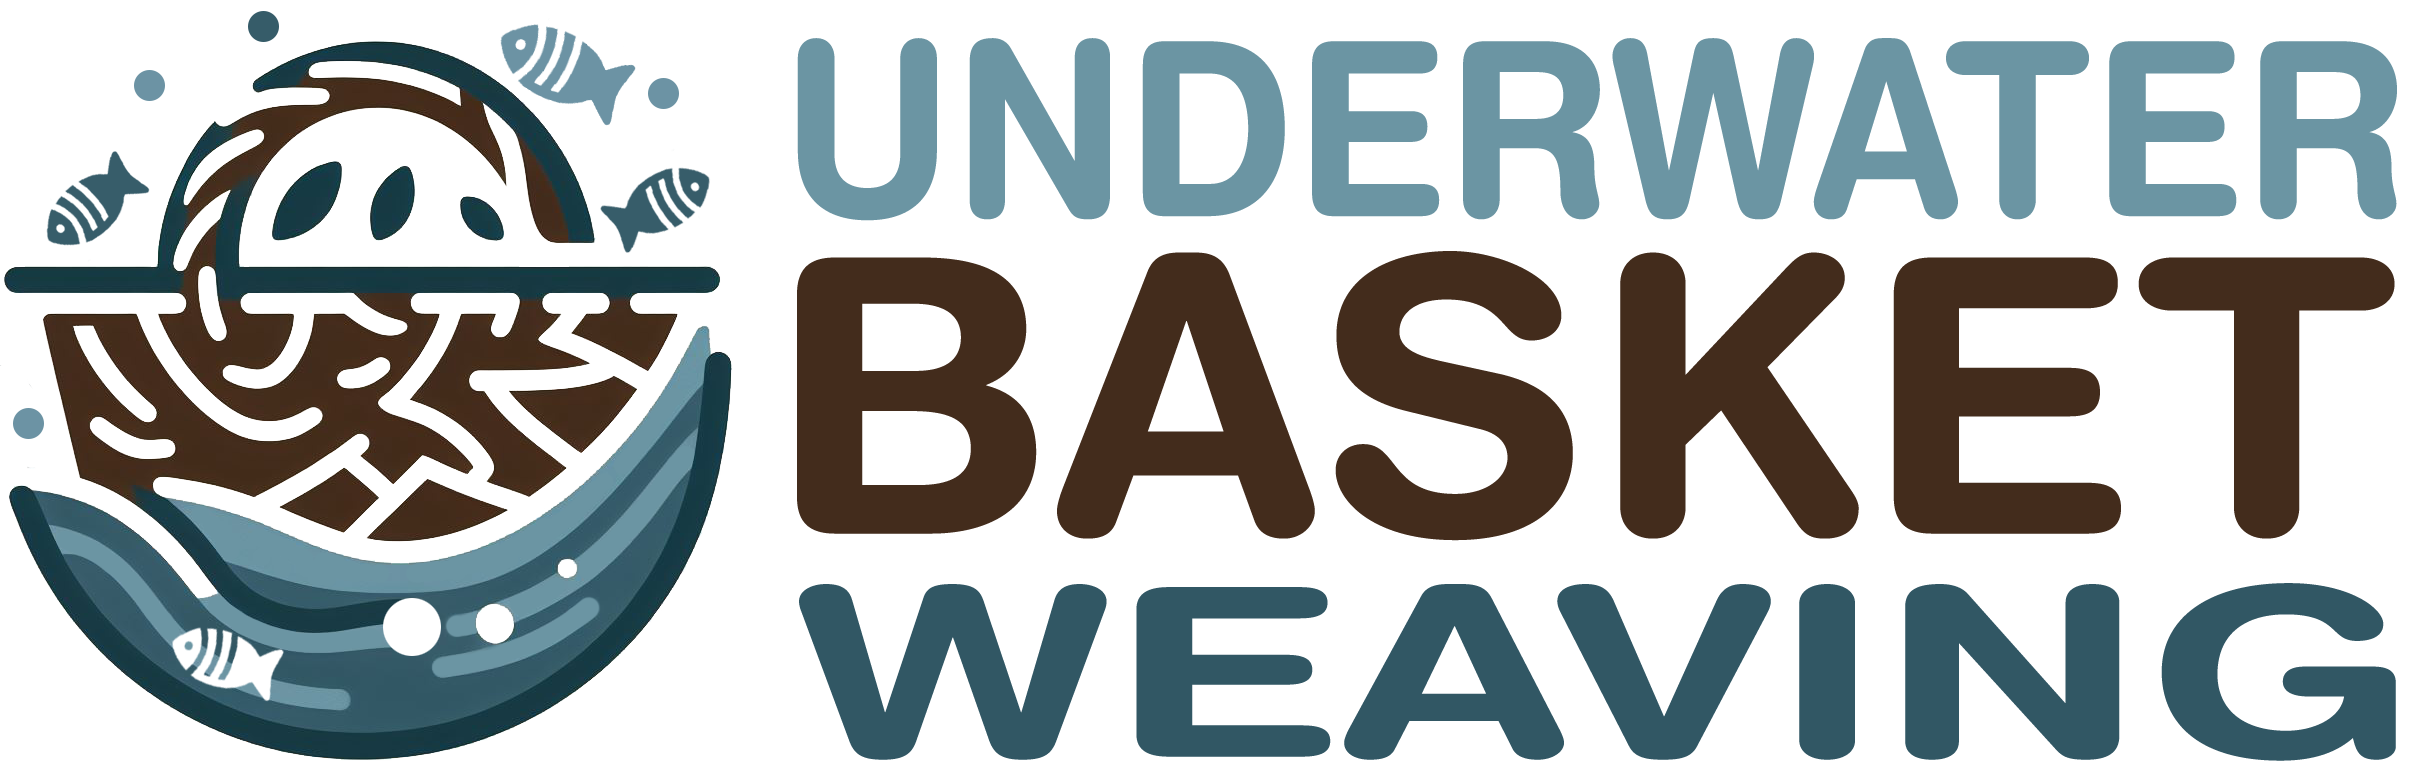 underwater basket weaving logo